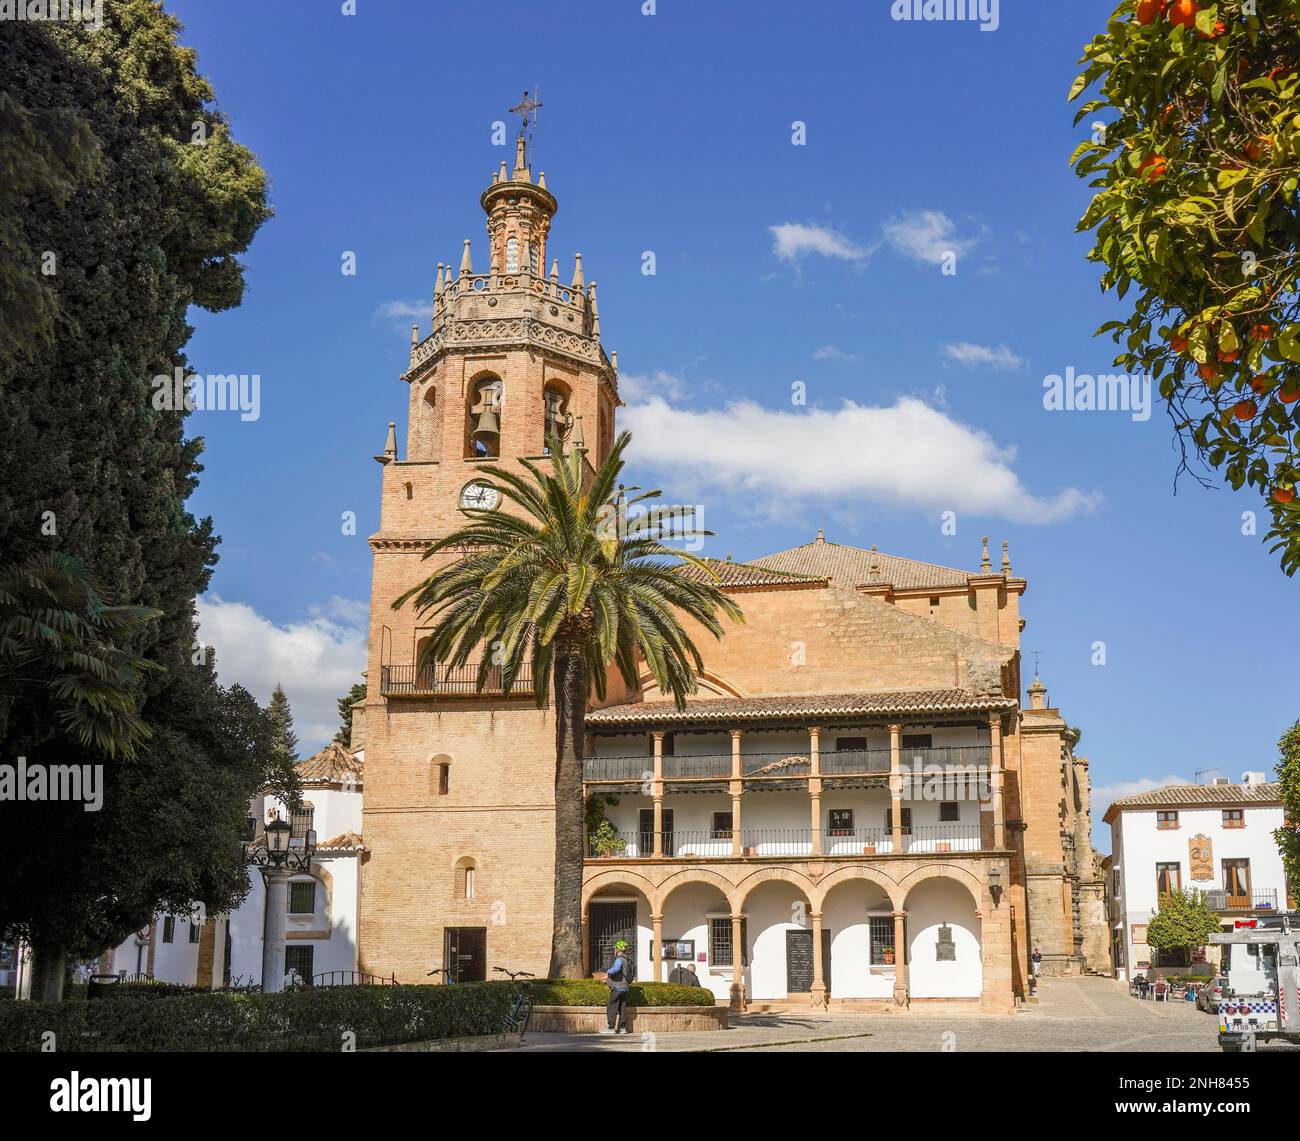 Ronda, Eglise de Santa Maria Maire, Iglesia Santa Maria Maire, Ronda, Espagne, Andalousie. Banque D'Images